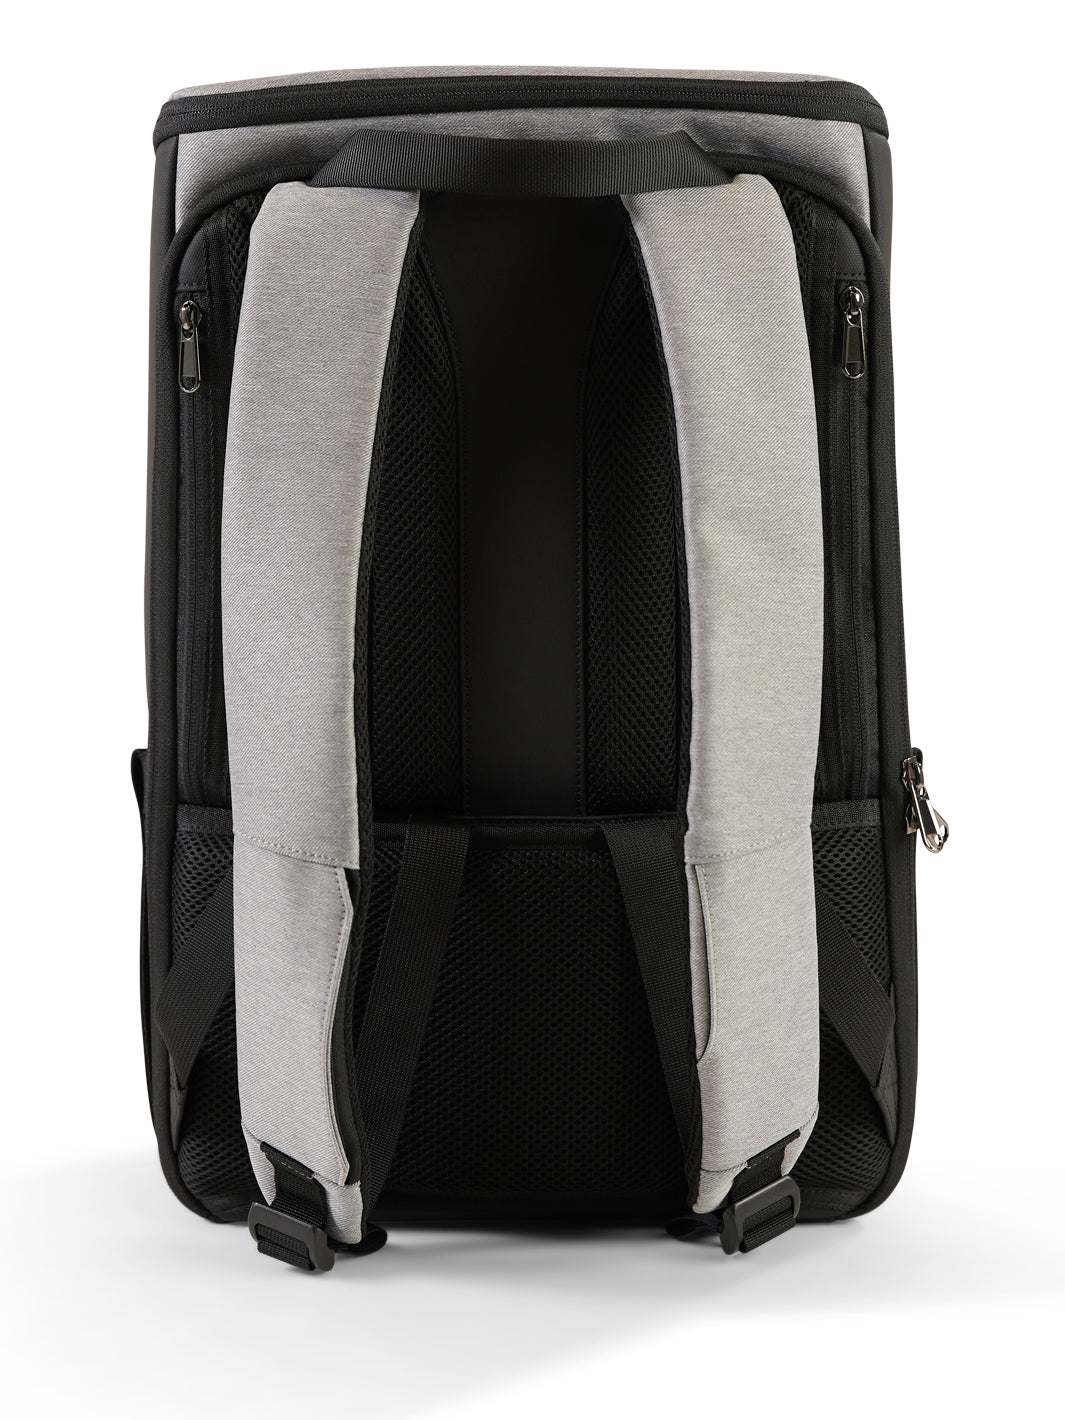 EZRI Premier Backpack - Laptop Bag | EZRI